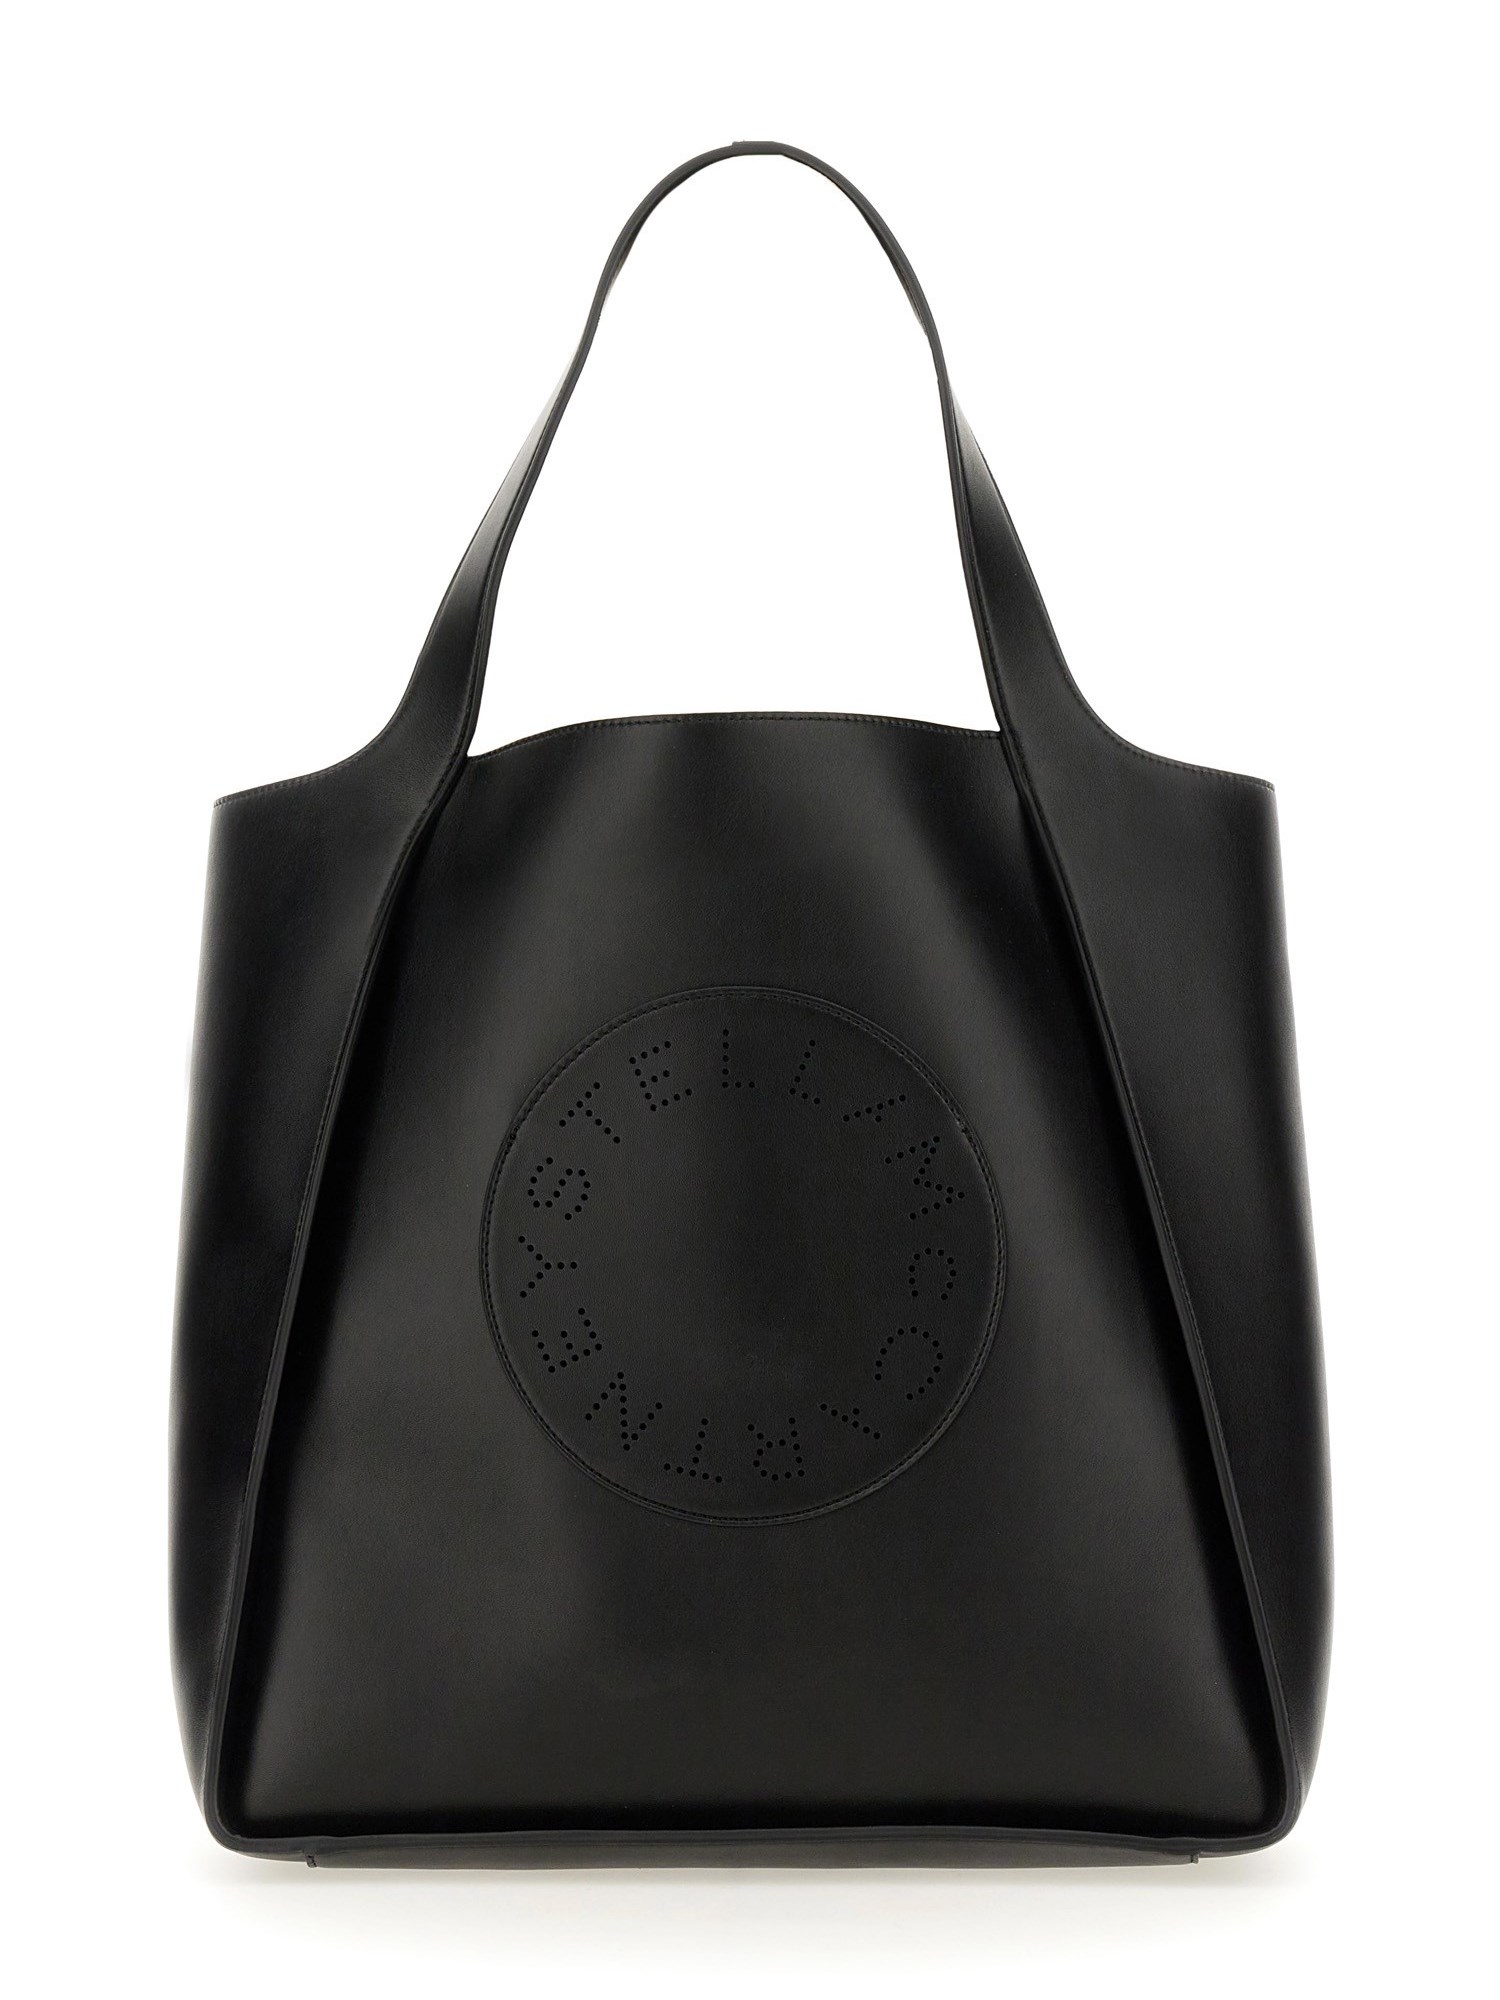 stella mccartney square tote bag with logo